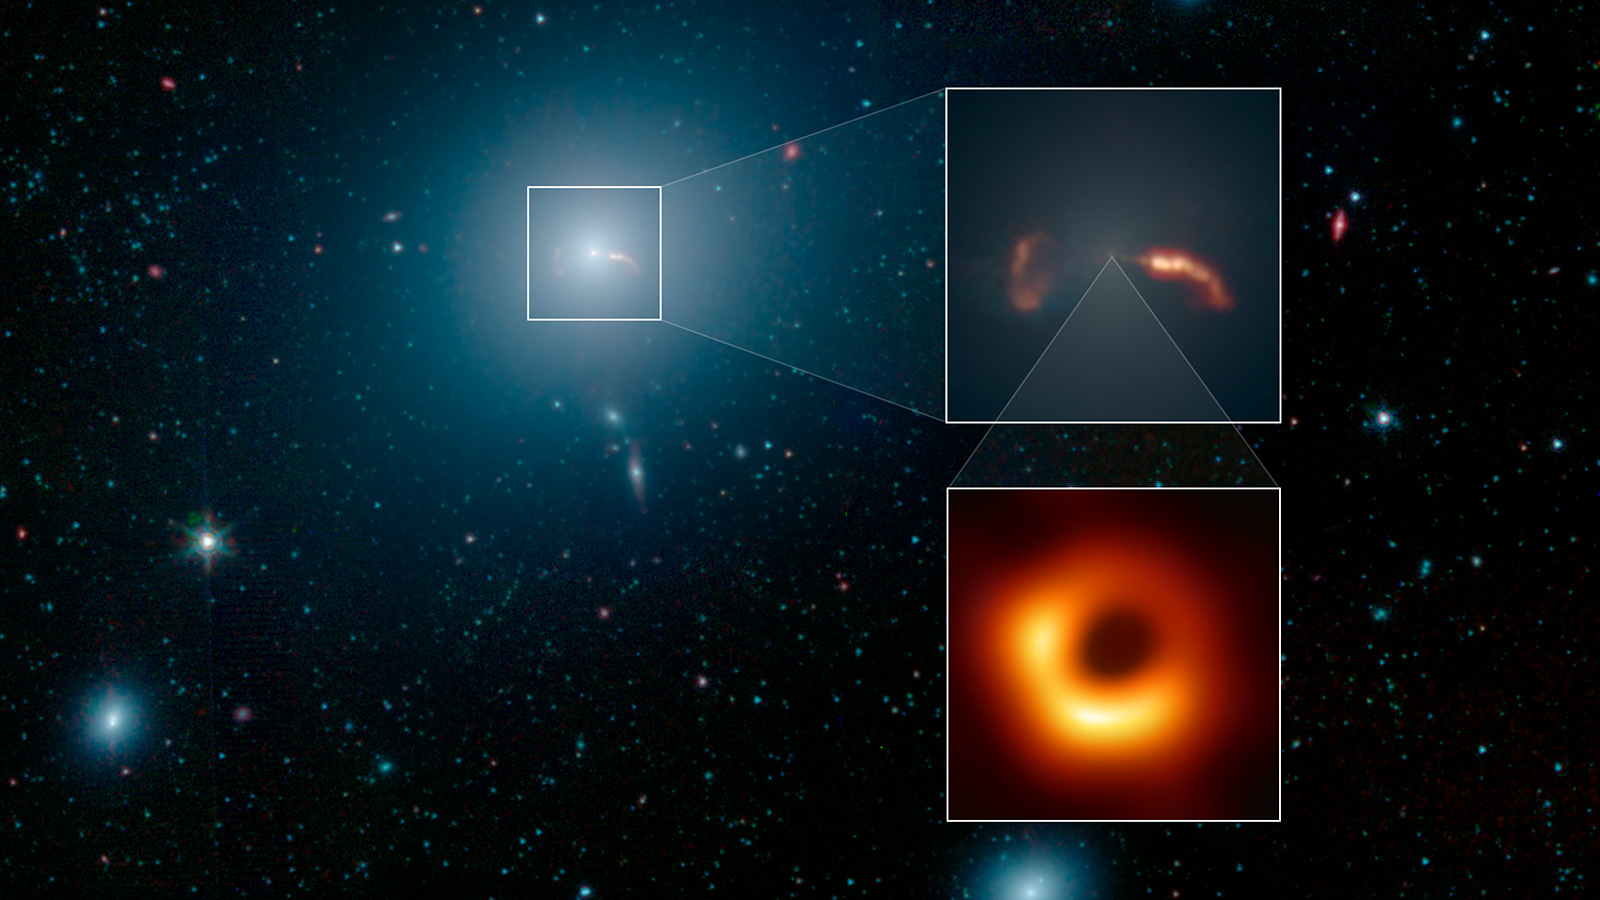 Black hole image shown near image of M87 galaxy